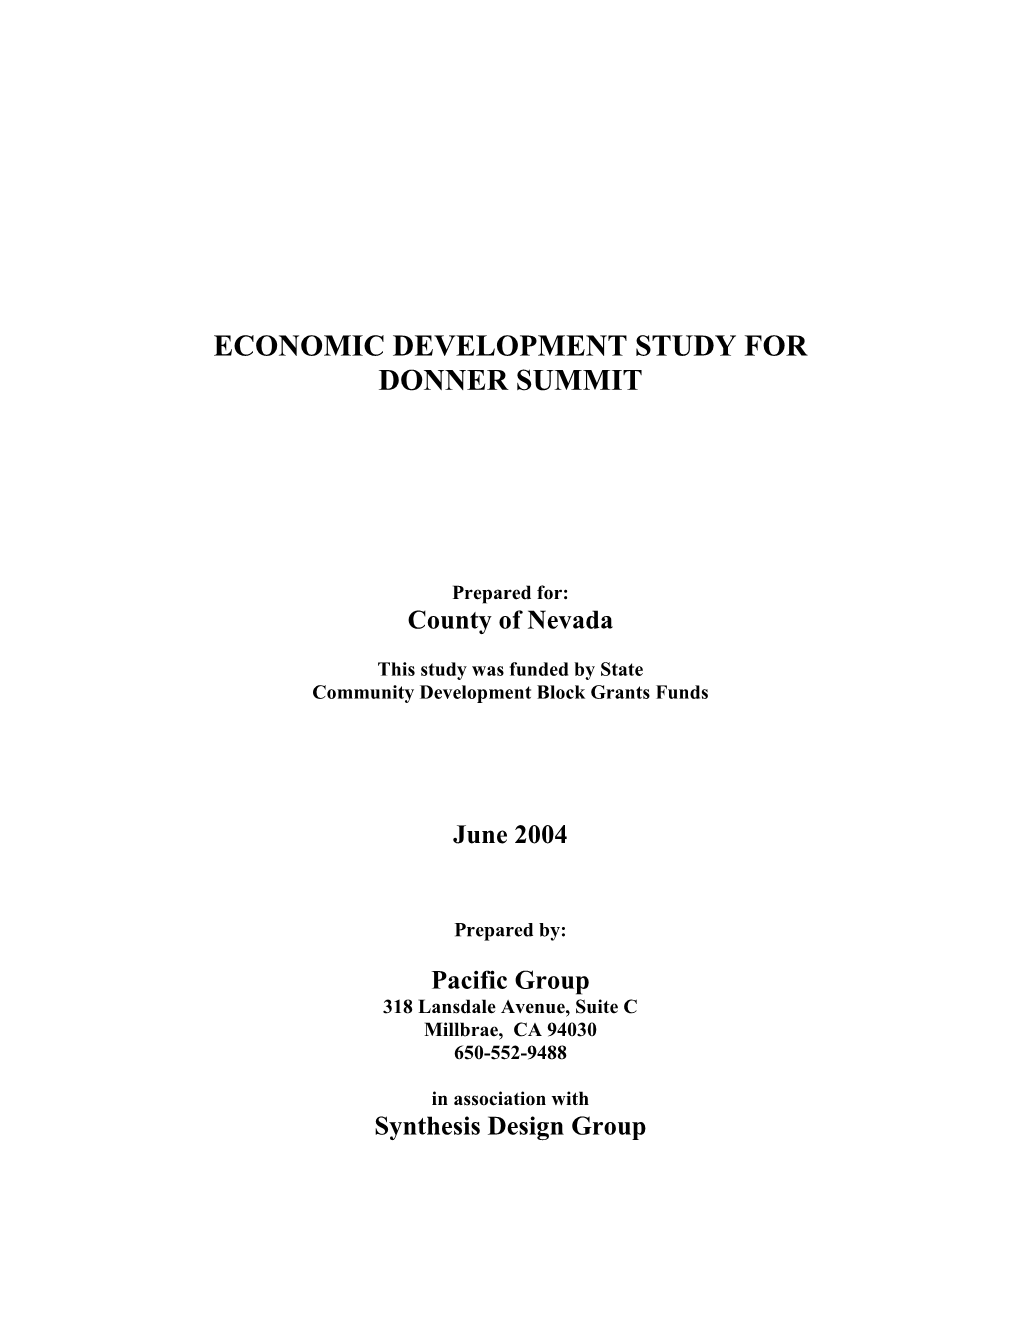 Economic Development Study for Donner Summit